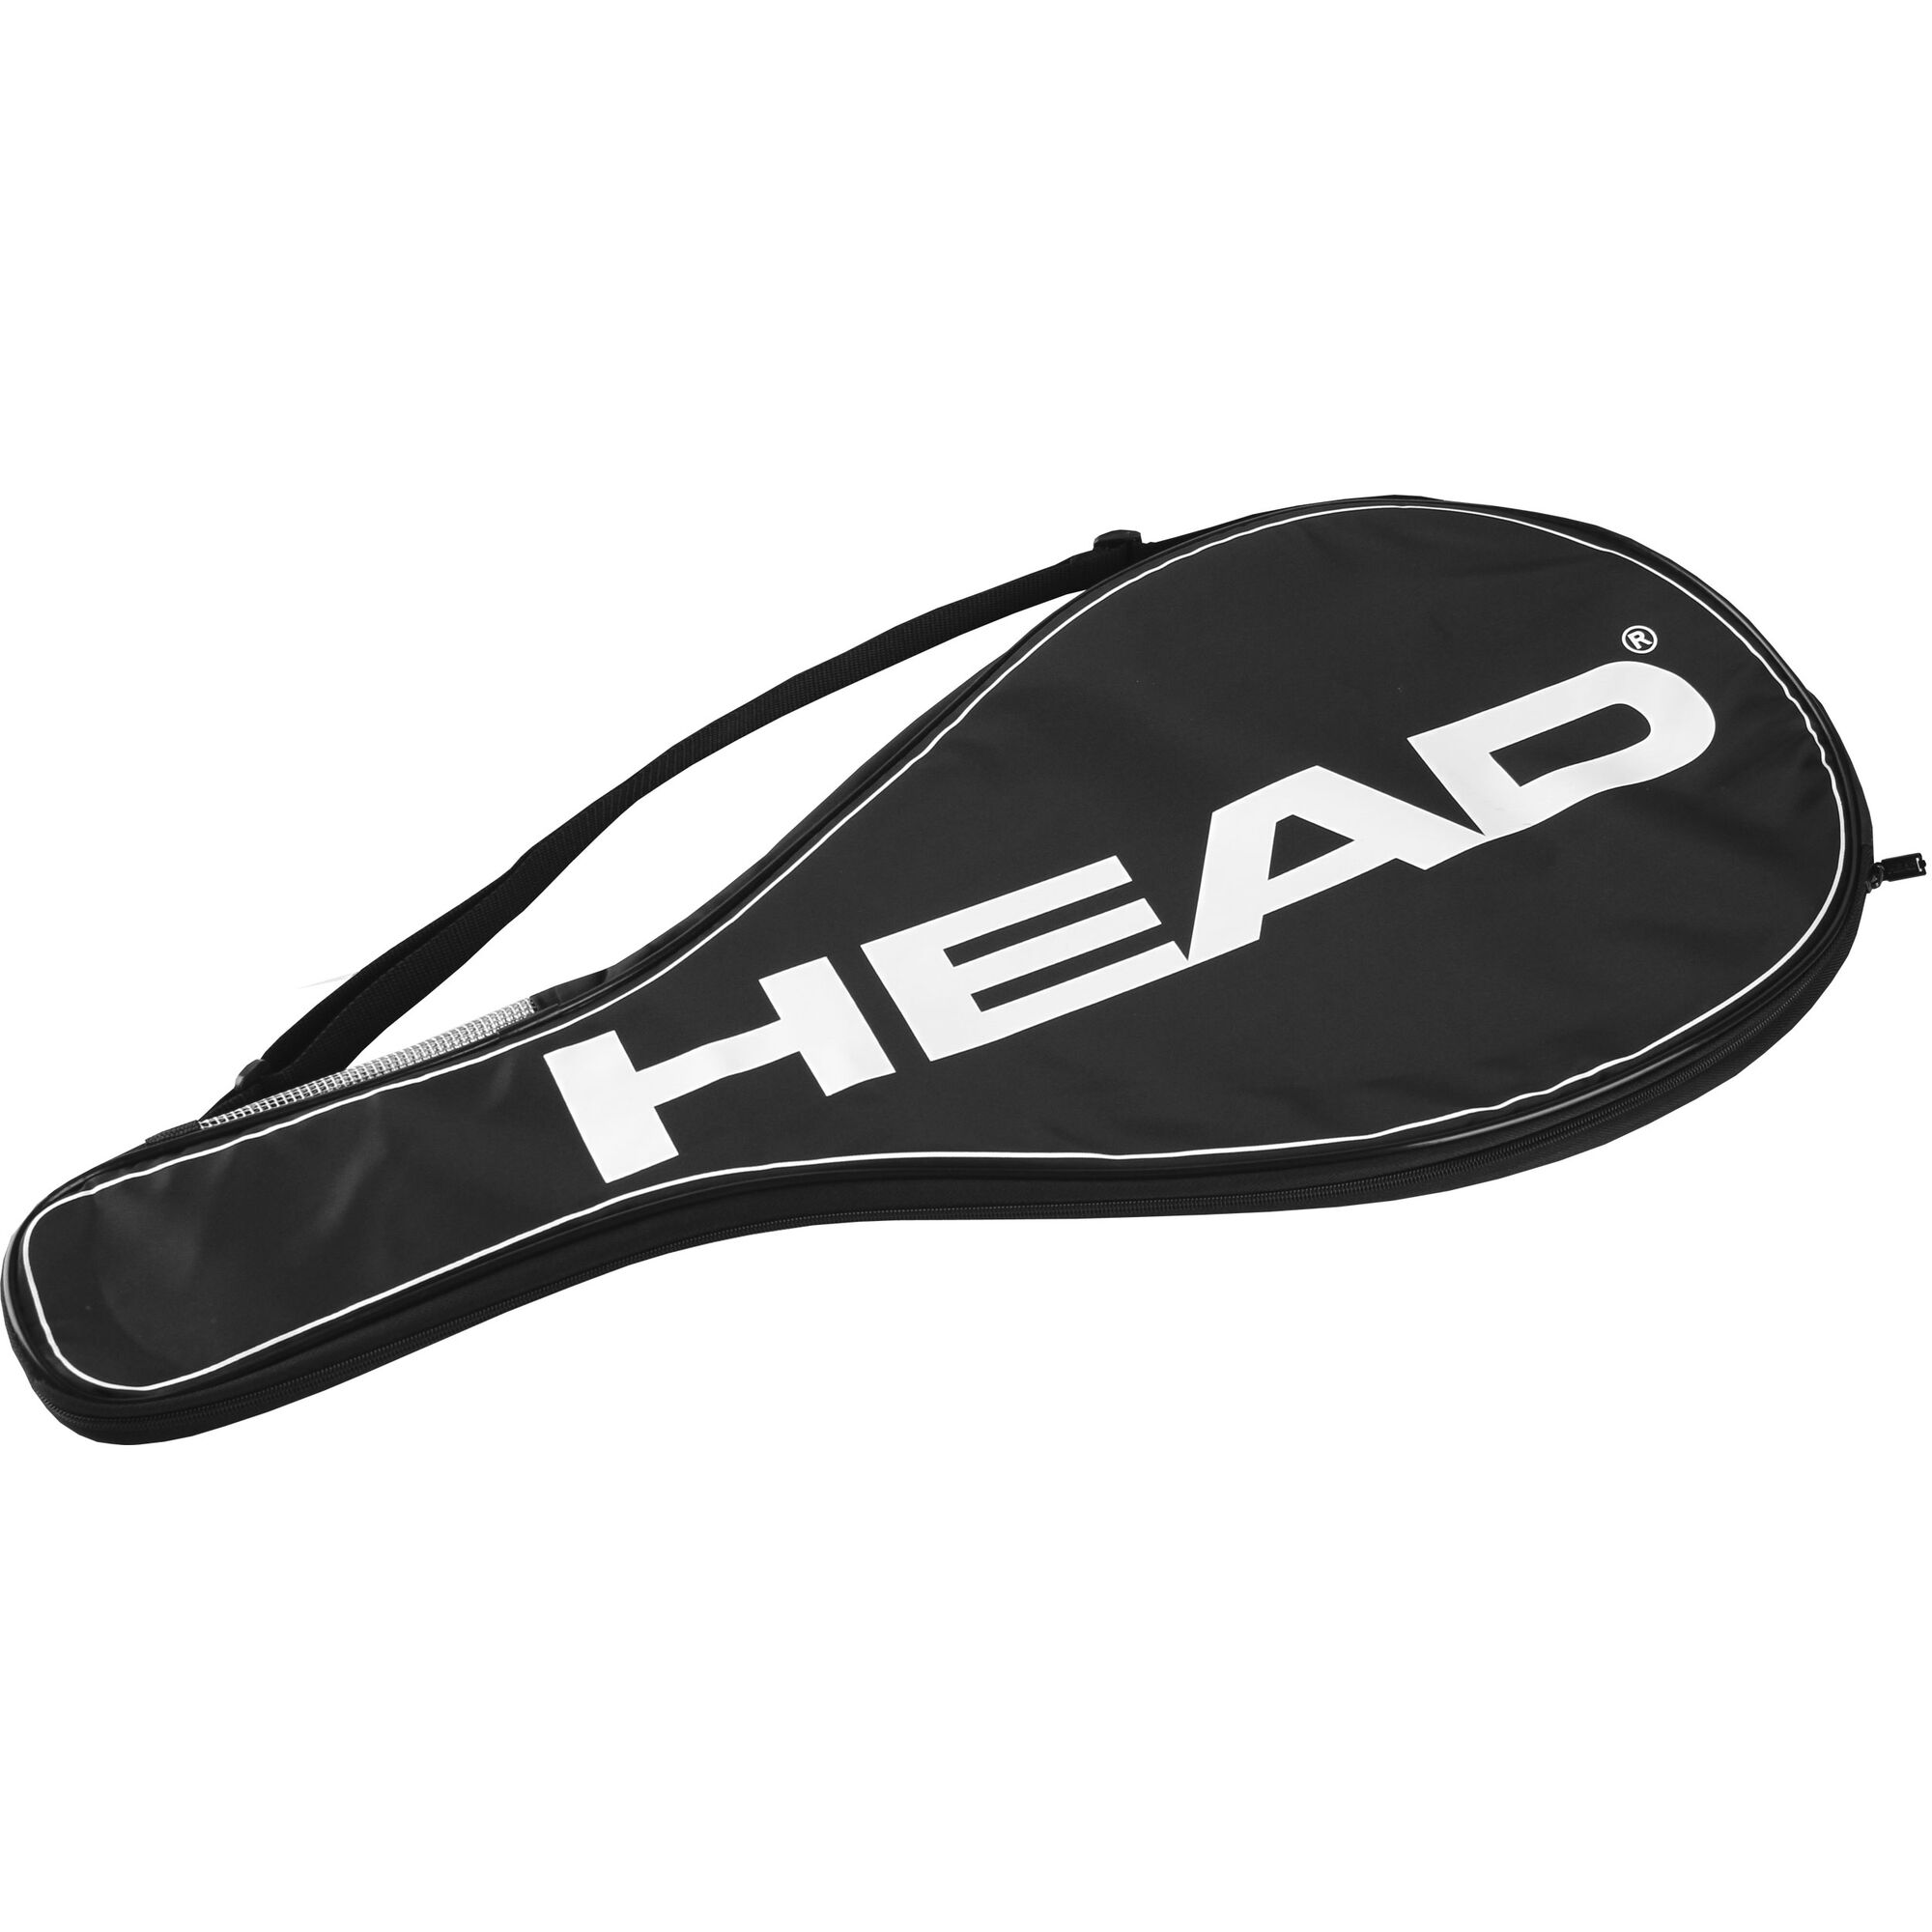 Buy HEAD Housse De Raquette Noir online